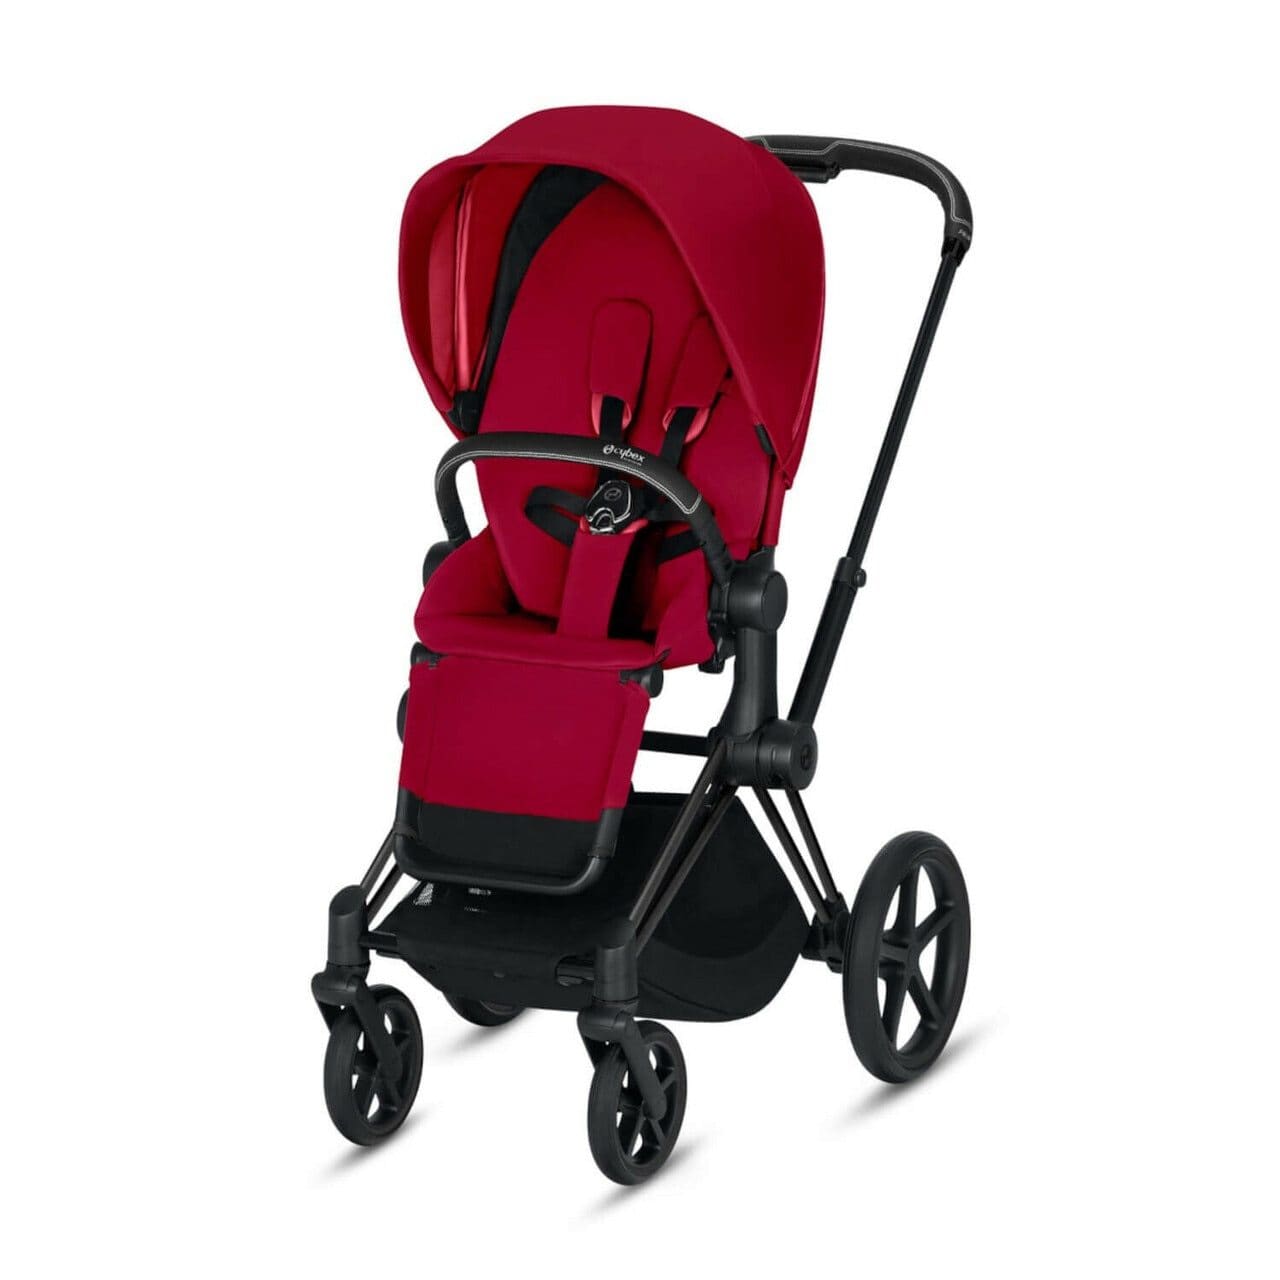 CYBEX Priam 3-in-1 Travel System Matte with Black Details Baby Stroller – True Red 519003307 4058511701363